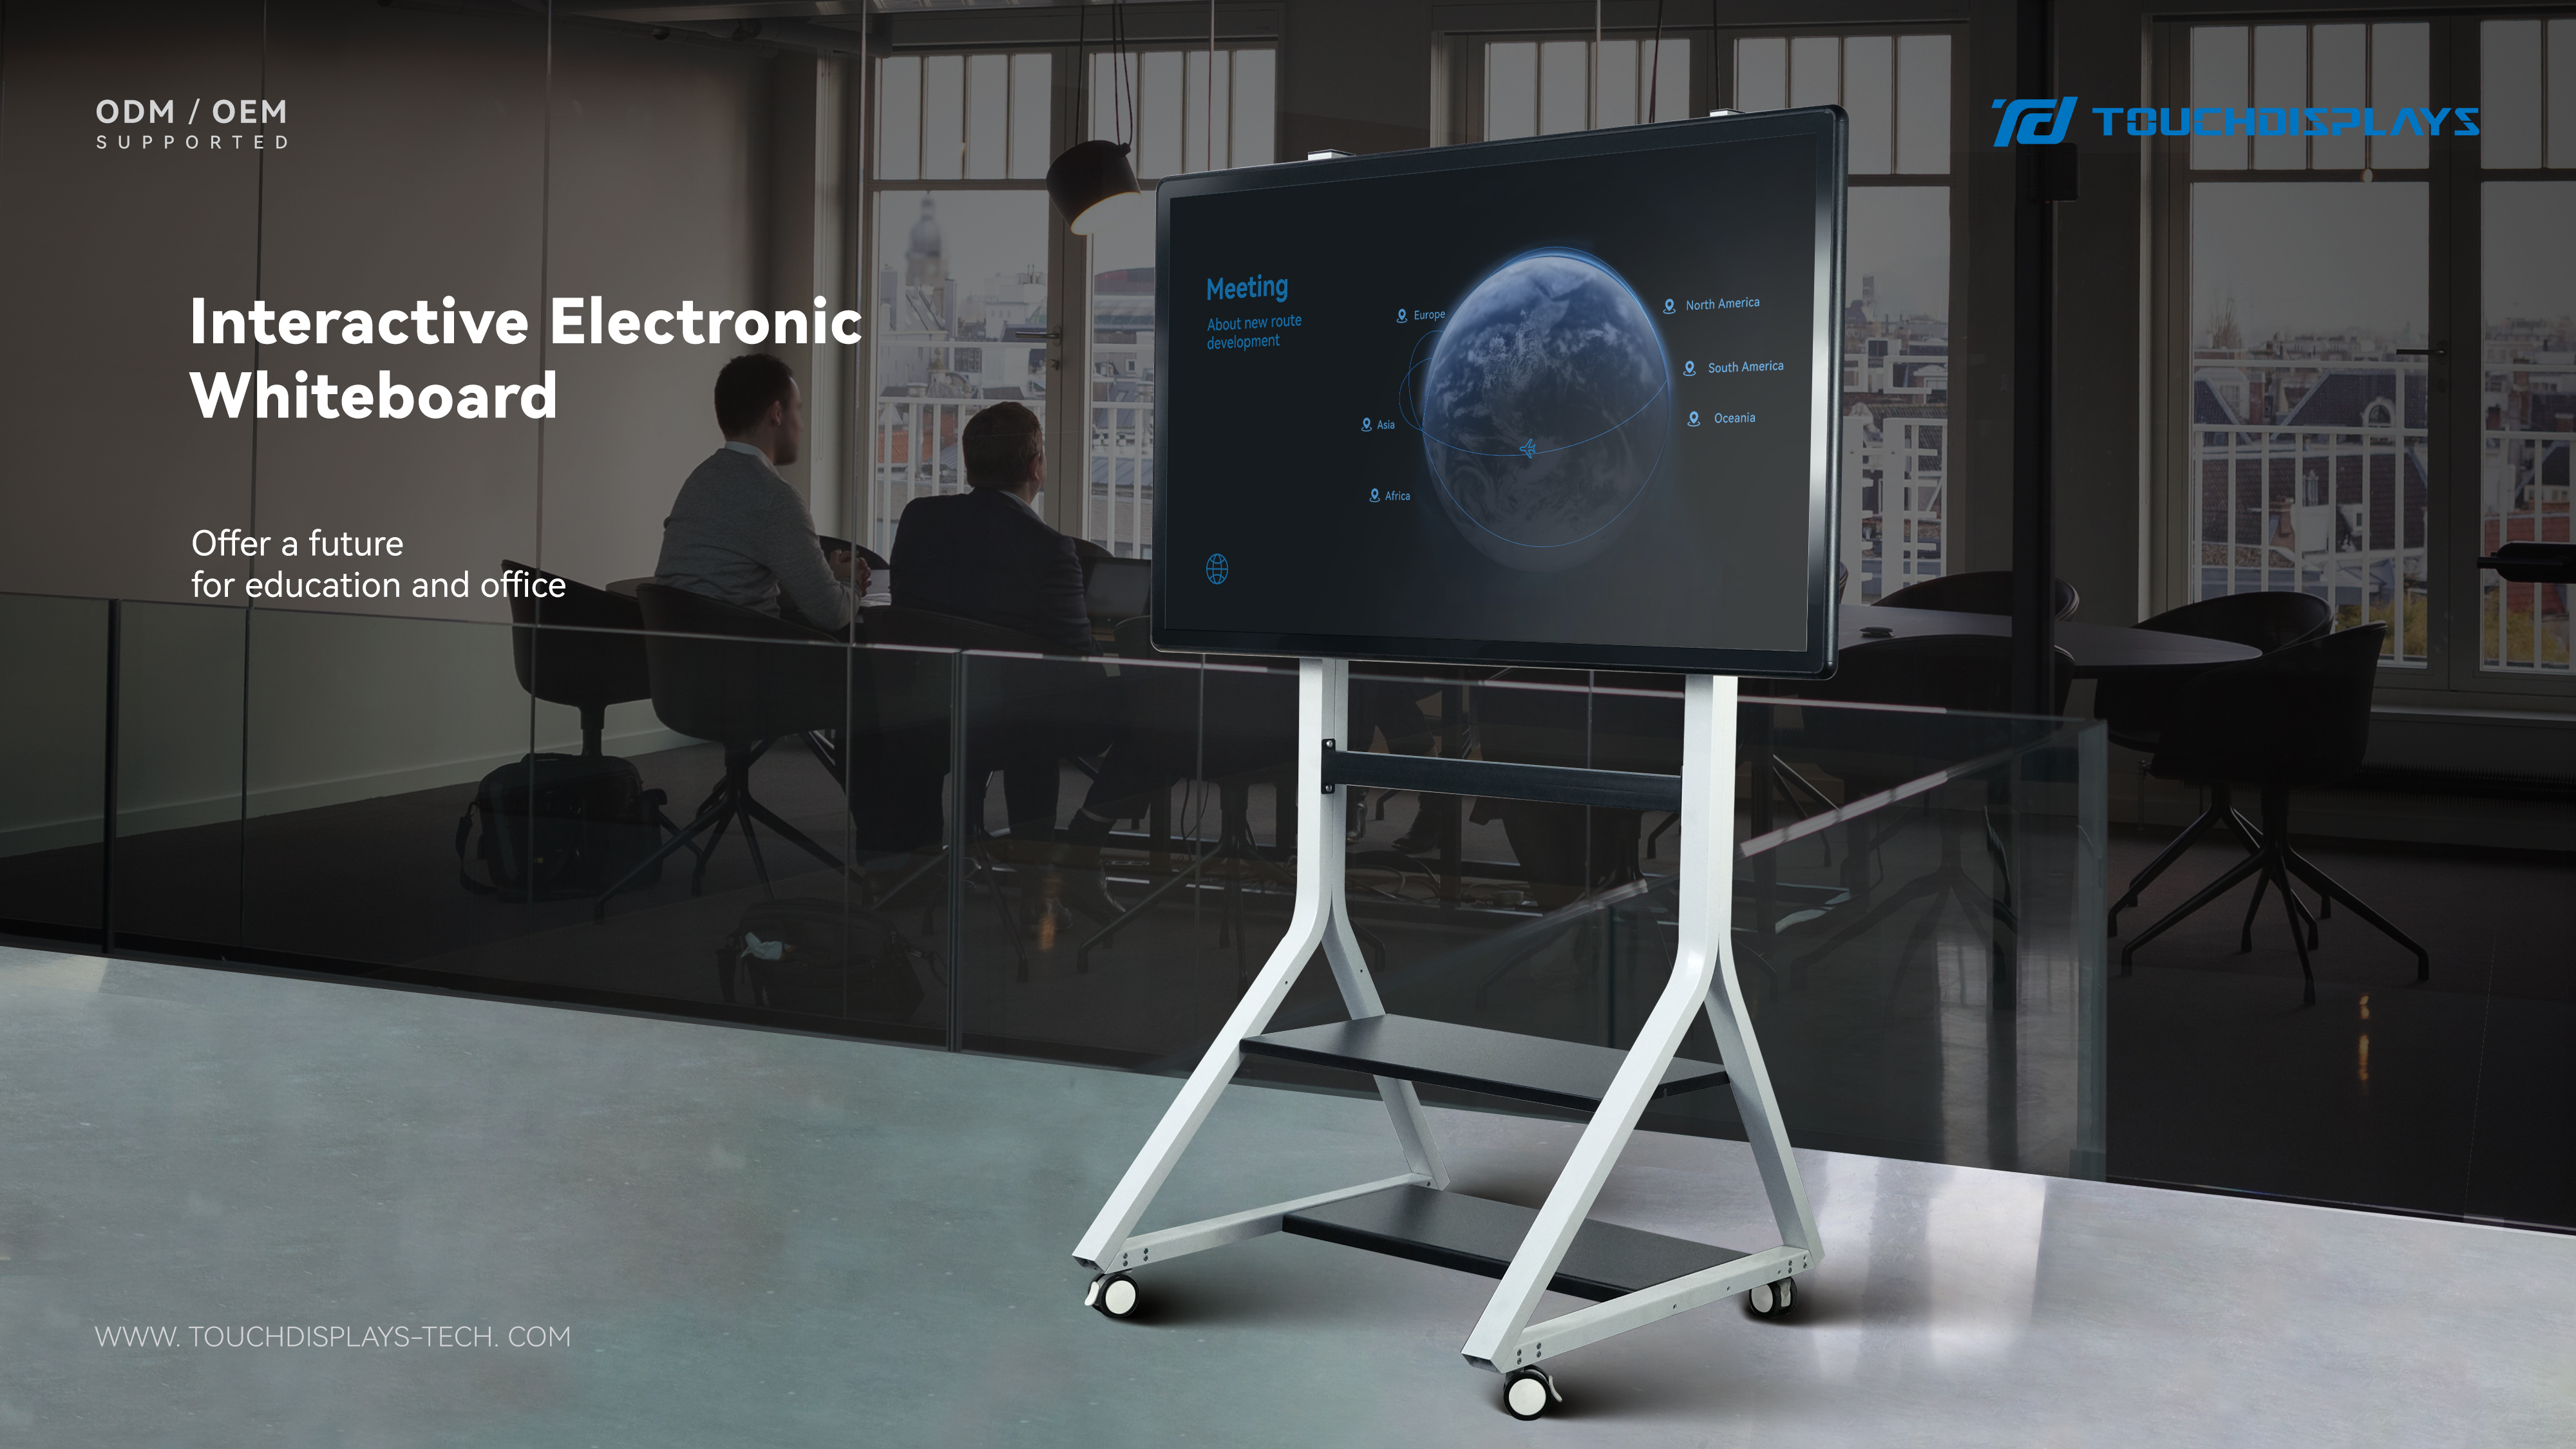 Poređenje interaktivne elektronske table TouchDisplays i tradicionalne elektronske table